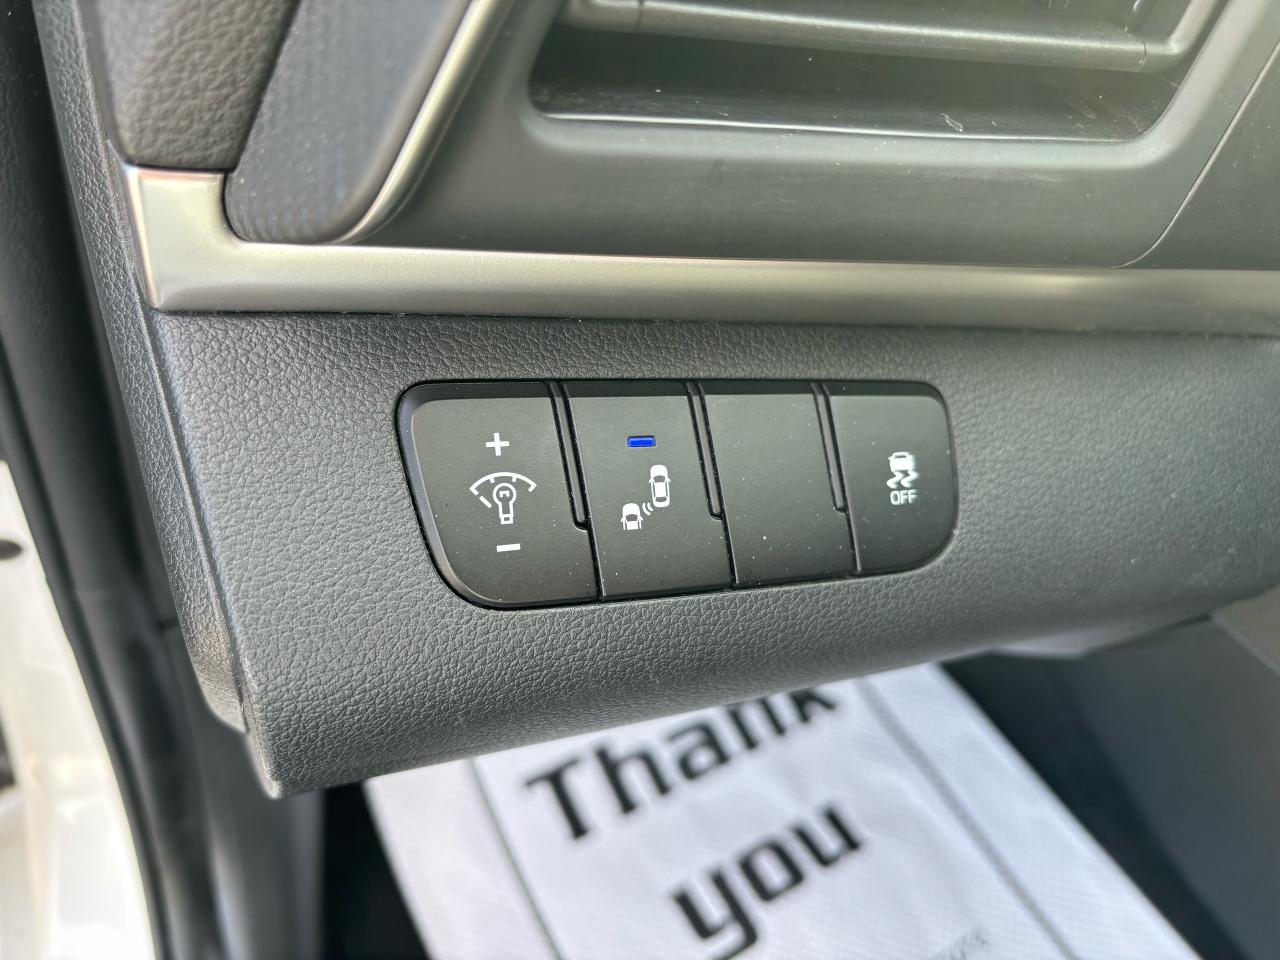 2019 Hyundai Elantra Preferred, 6 Speed Manual Transmission,Back-Up Cam - Photo #11